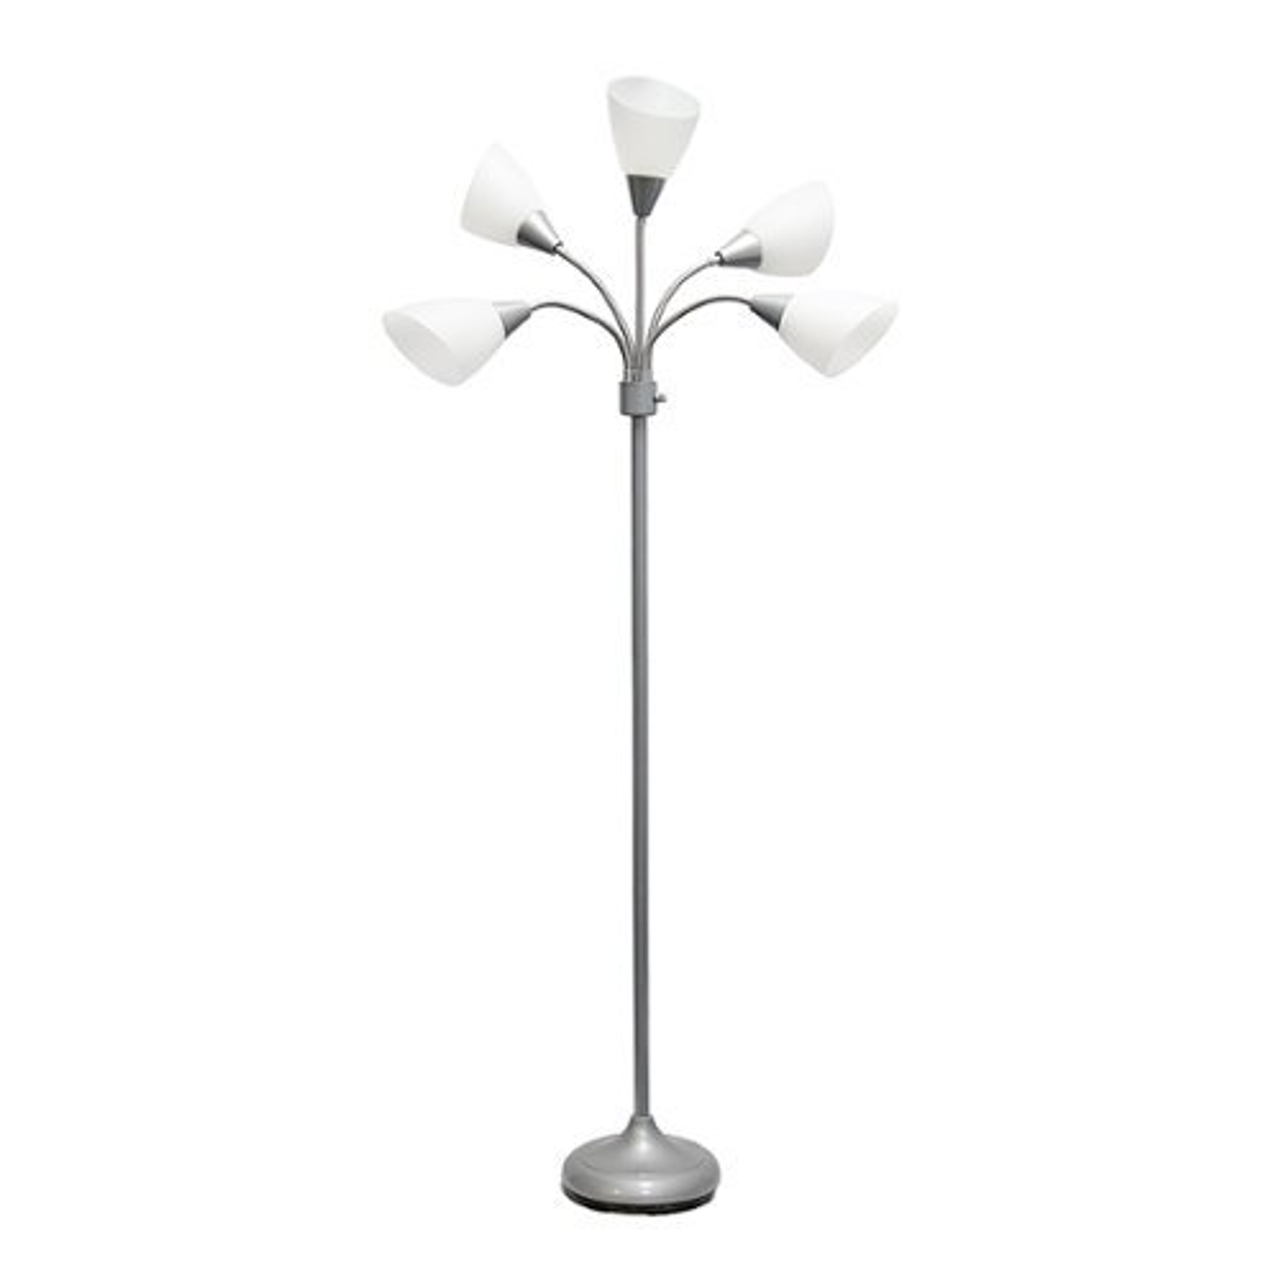 Simple Designs 5 Light Adjustable Gooseneck Floor Lamp - Silver/White Shades